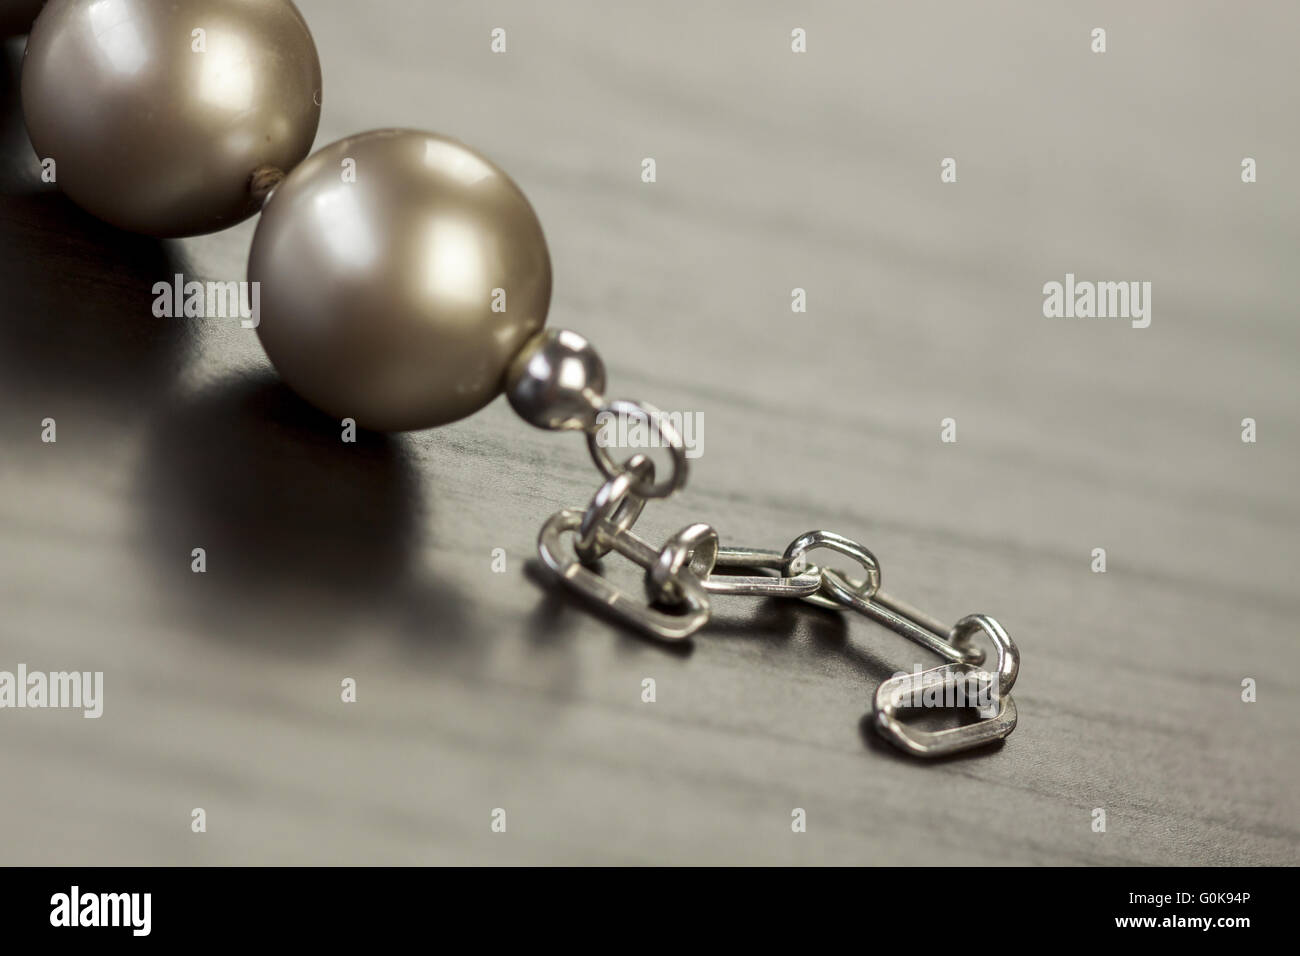 String of shiny grey beads Stock Photo